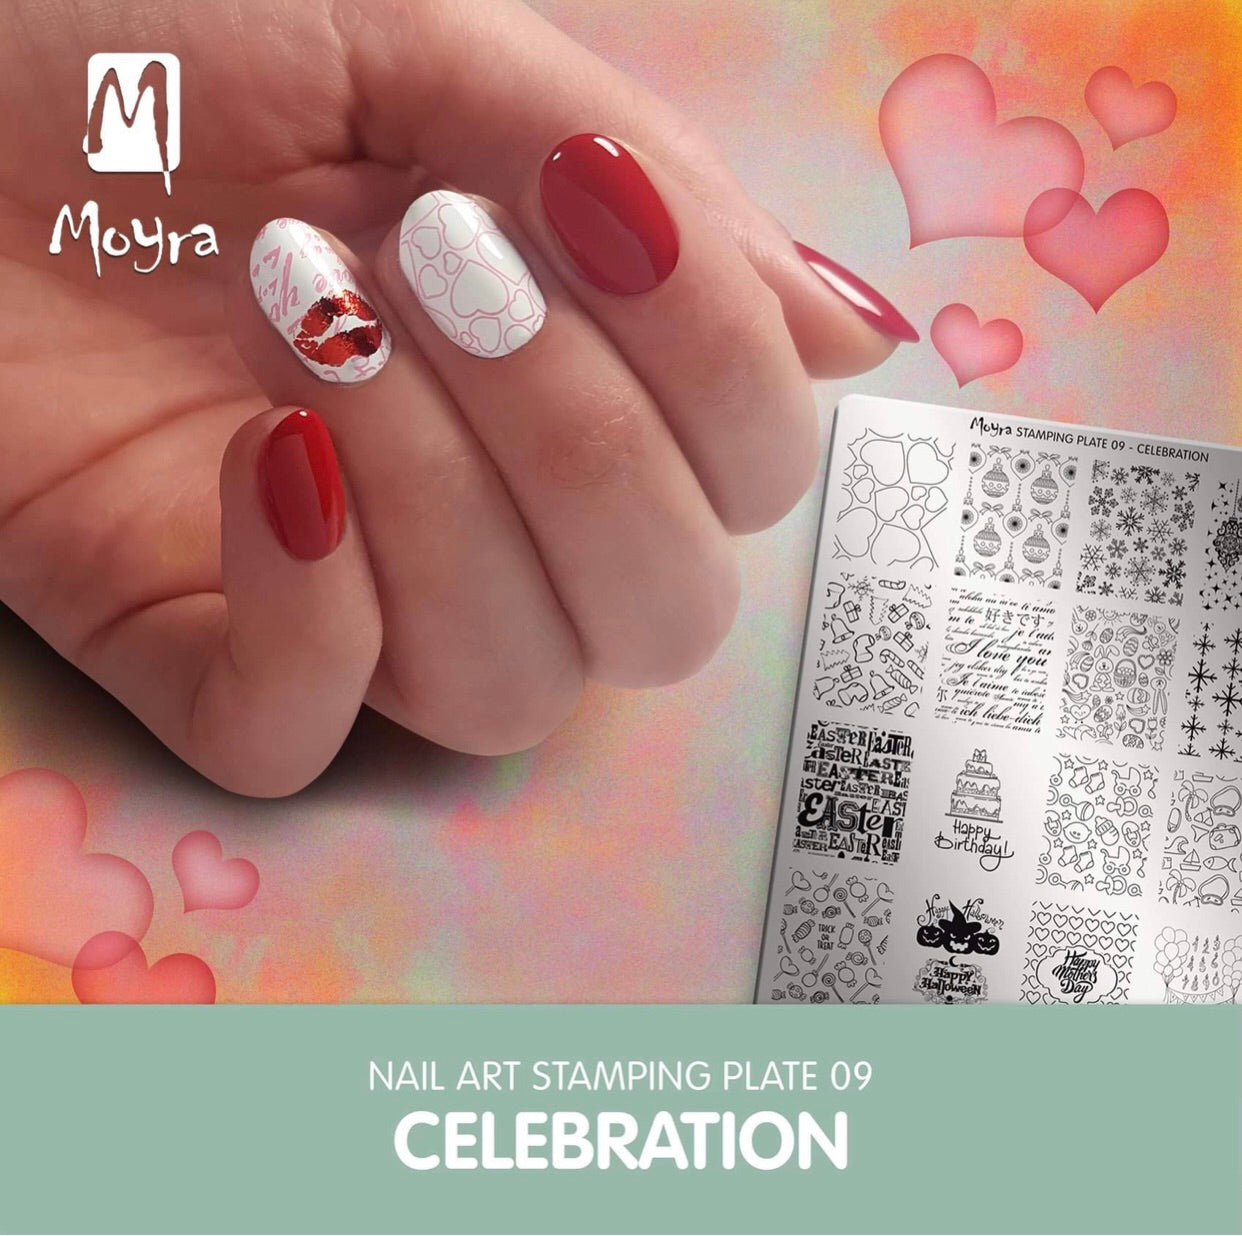 Celebration - Stamp your nails